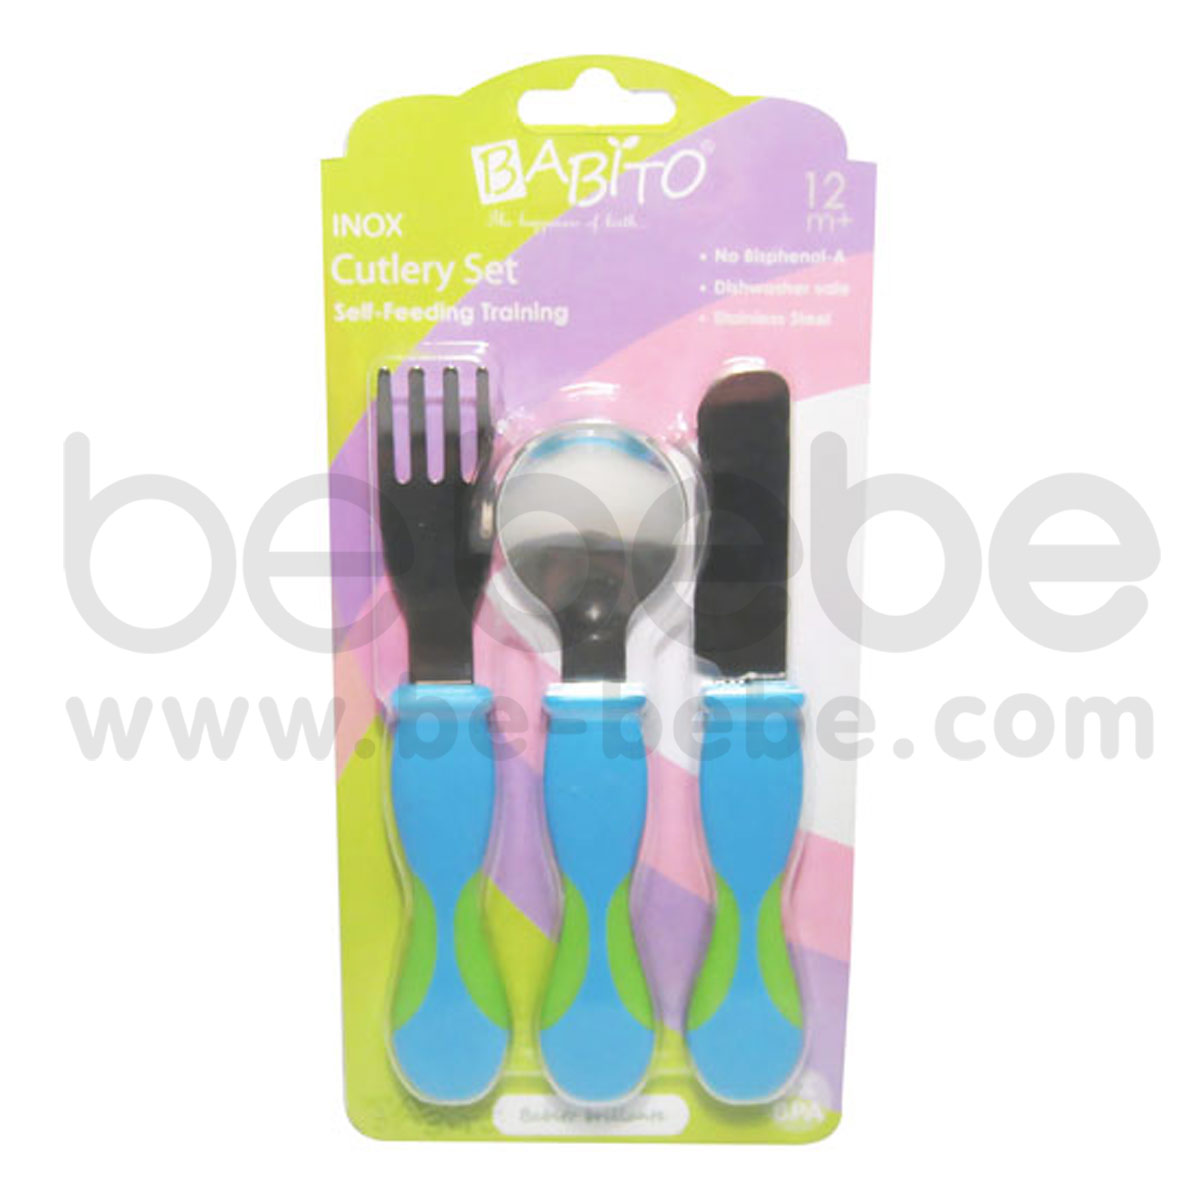 BABITO : ชุดฝึกทานอาหารสำหรับเด็ก ช้อน ส้อม มีด INOX Stainless Cutlery Training Set / ฟ้า